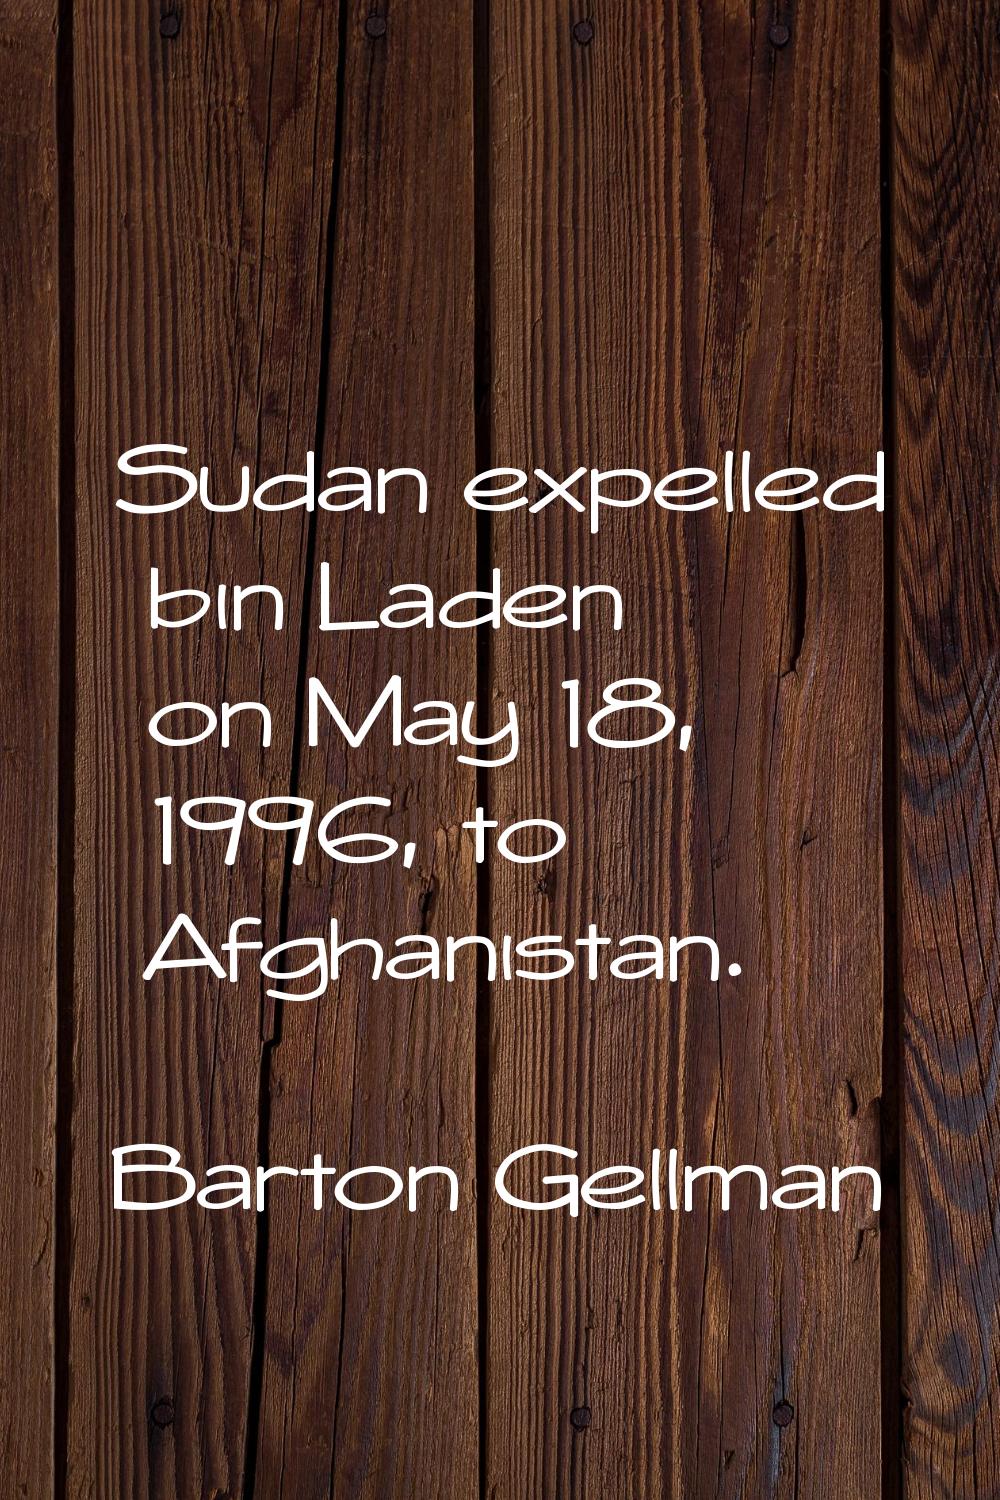 Sudan expelled bin Laden on May 18, 1996, to Afghanistan.